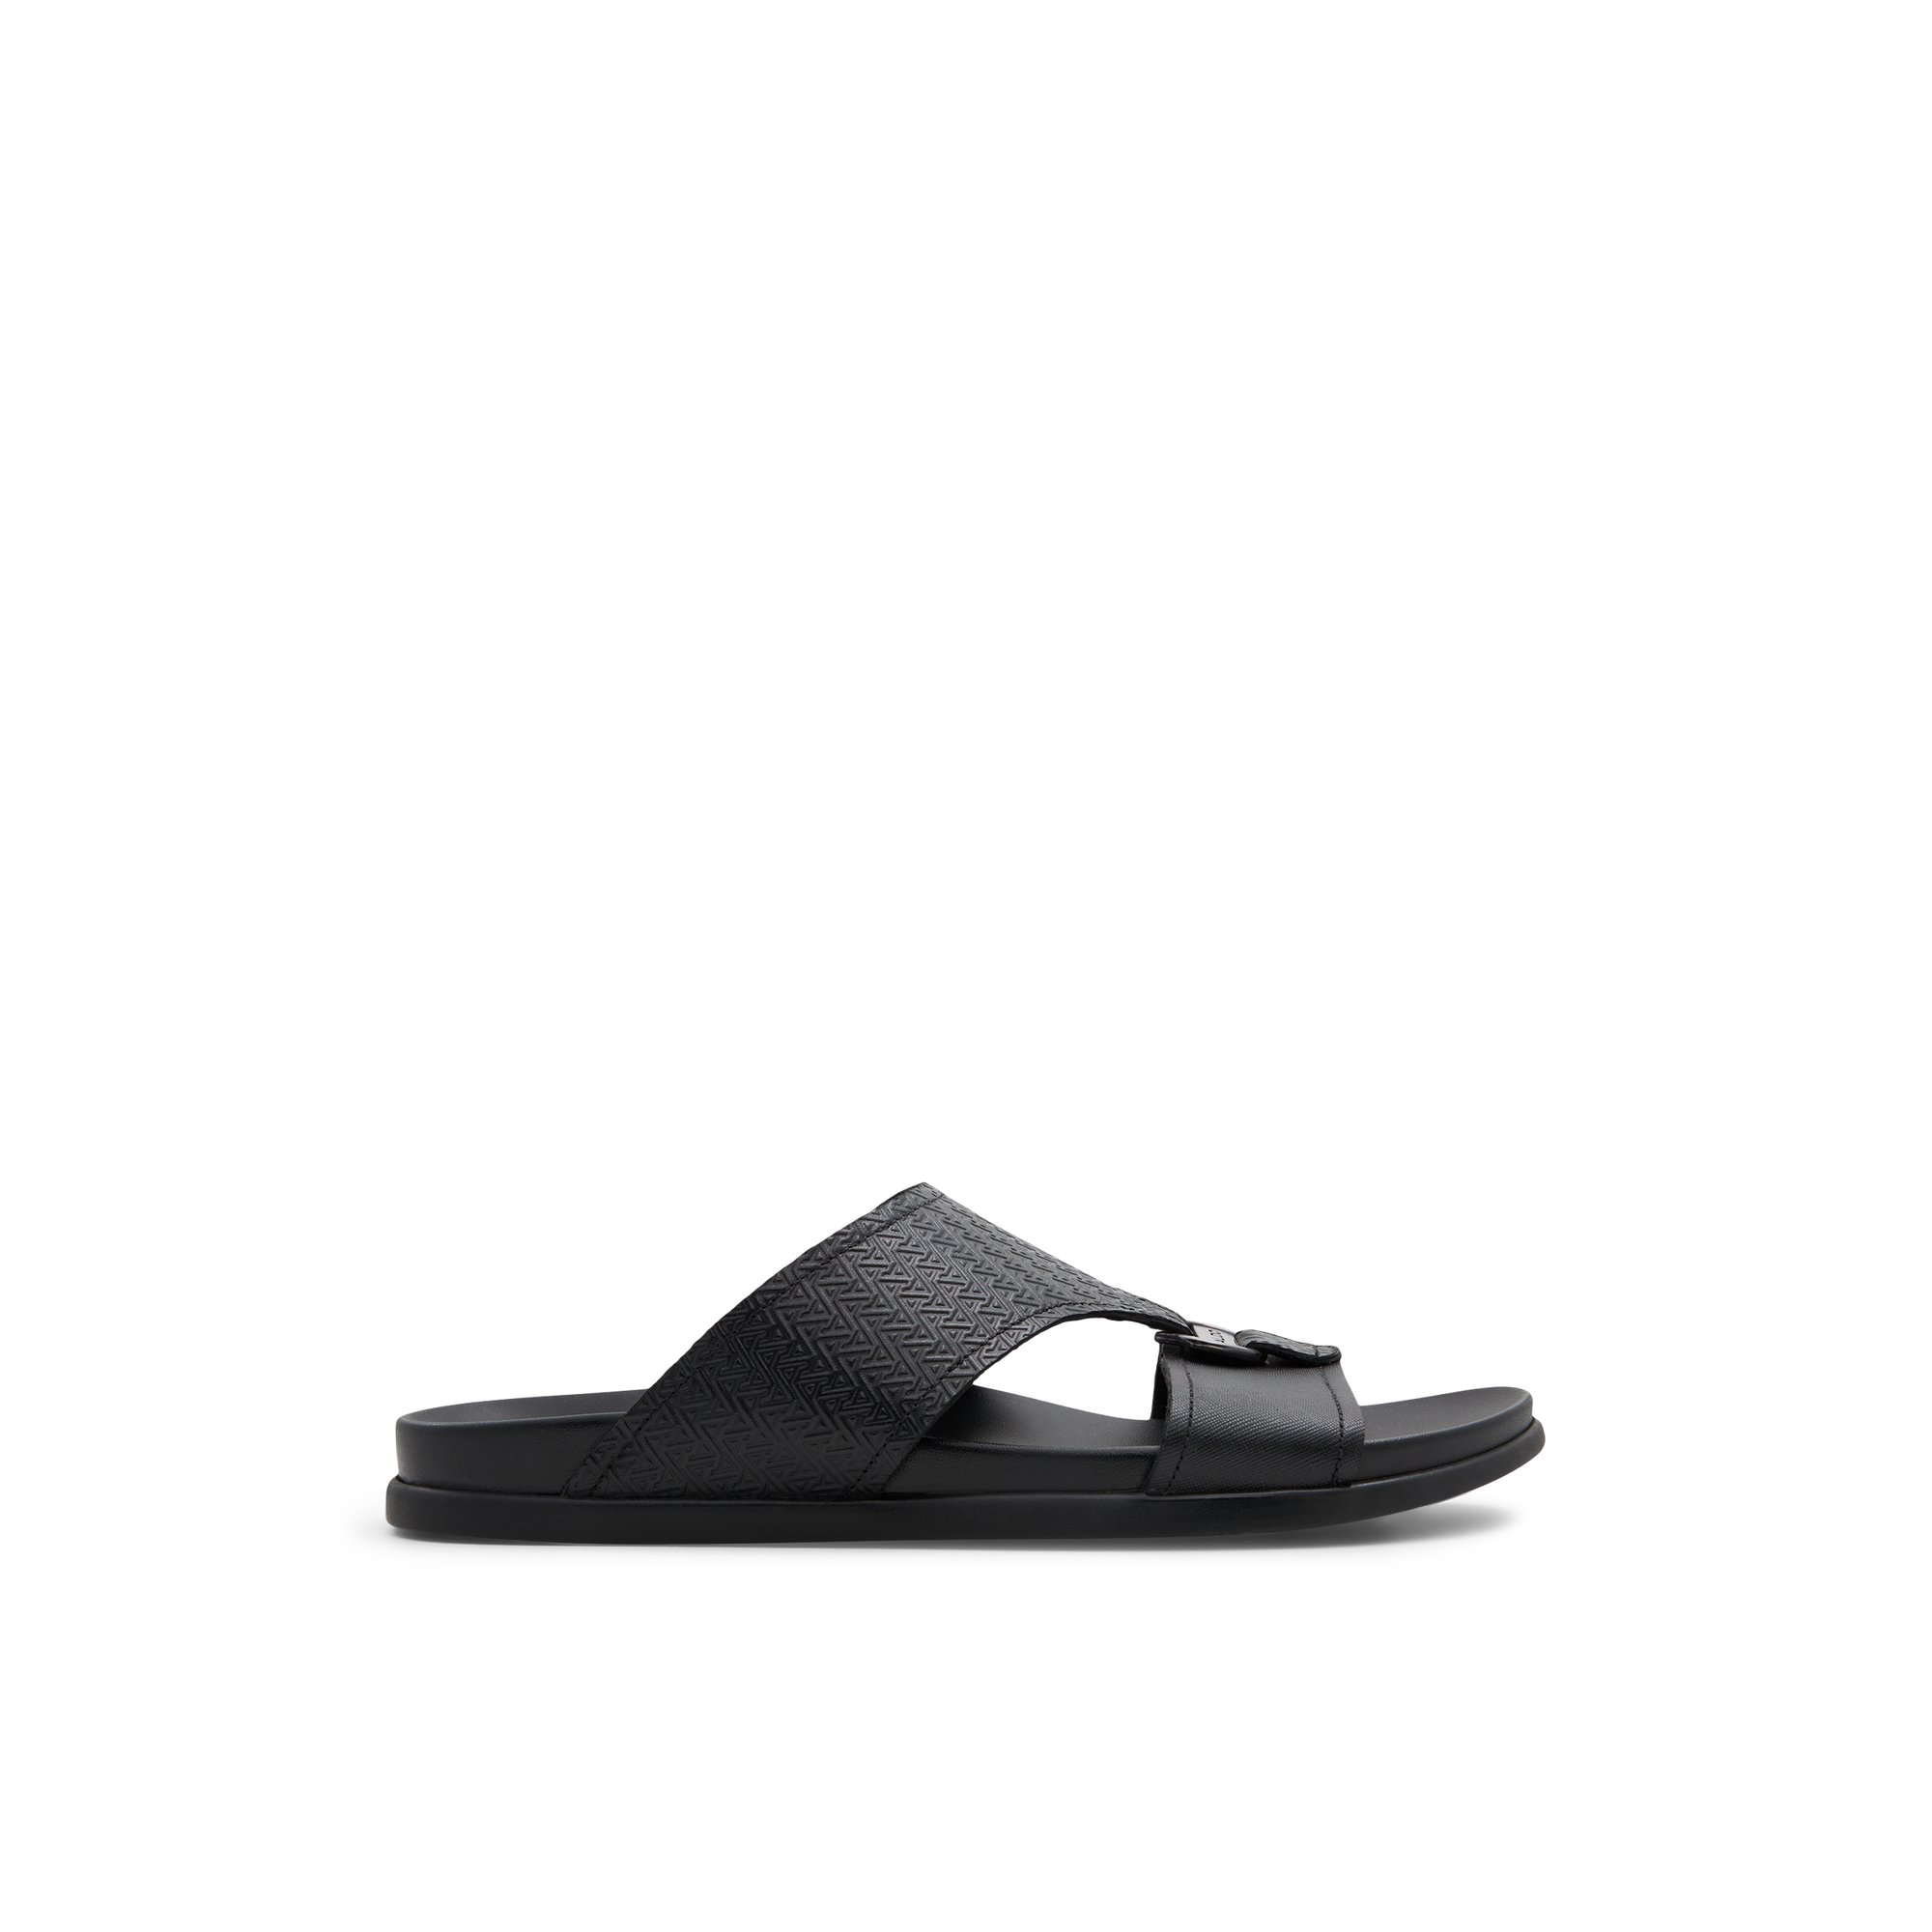 ALDO Adlar - Men's Slide Sandals - Black